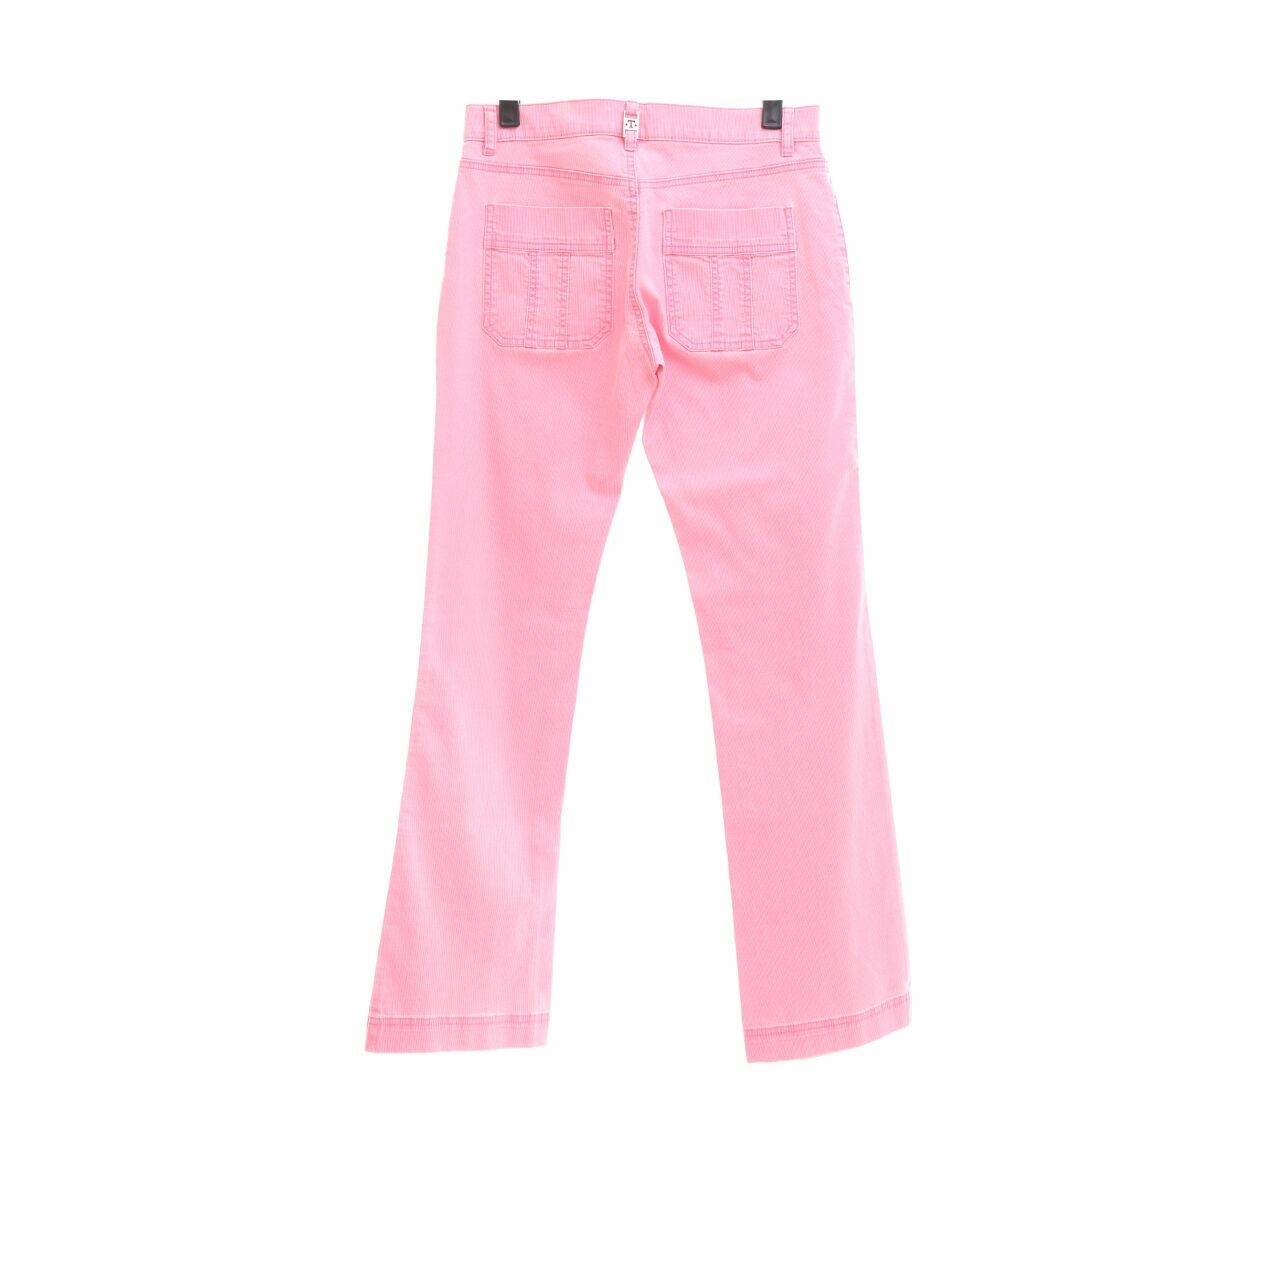 Tommy Hilfiger Culottes Pink Long Pants